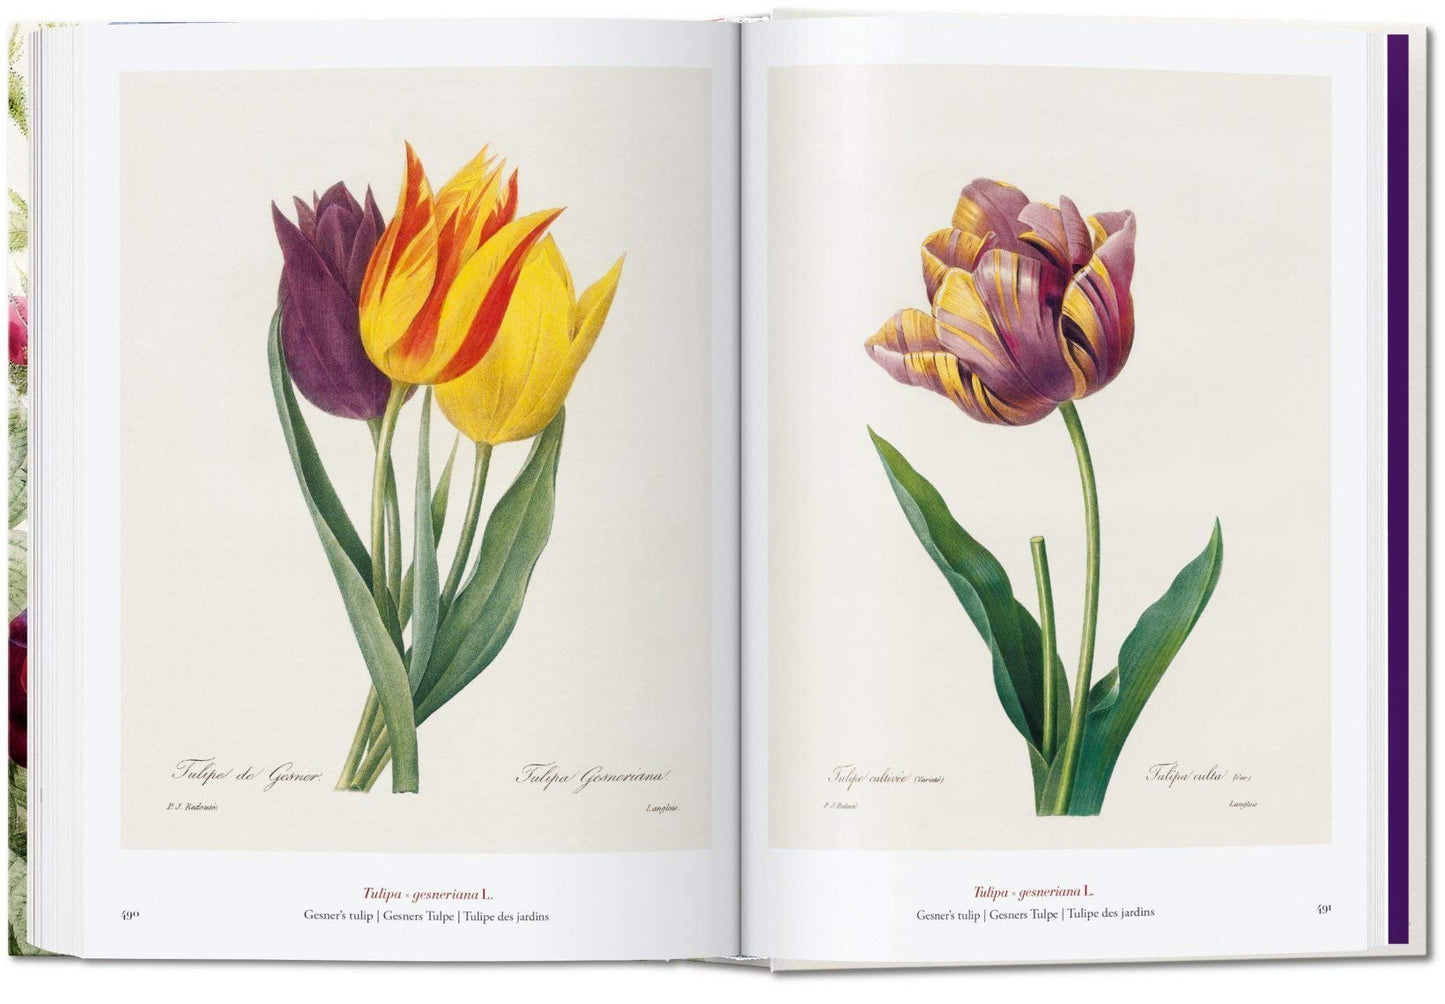 40 The Book of Flowers - Pierre-Joseph Redouté